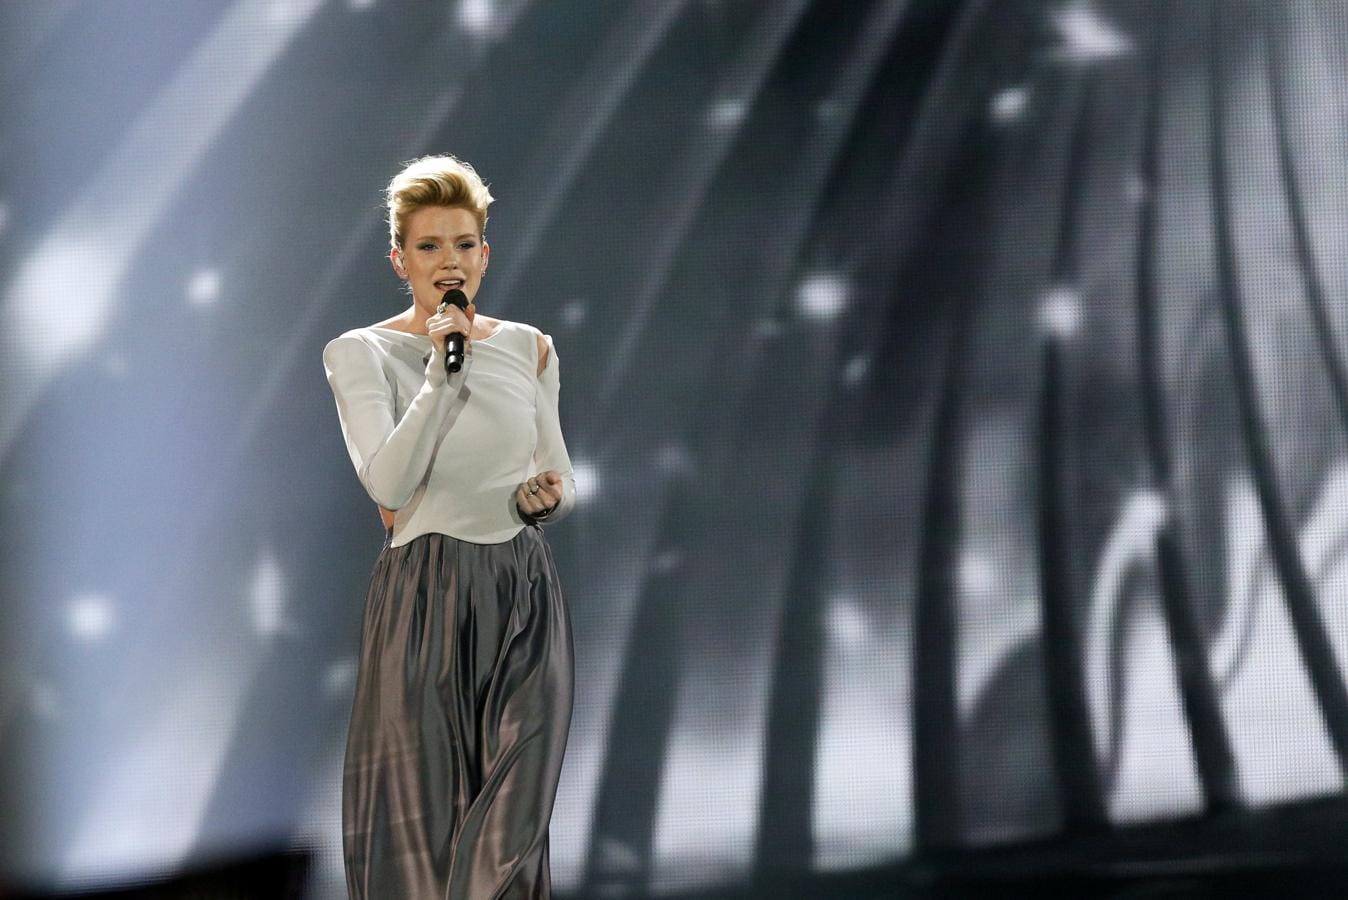 Actuación «titánica». Levina, representante de Alemania, cantó «Perfect Life», una canción con cierto parecido a «Titanium» de David Guetta